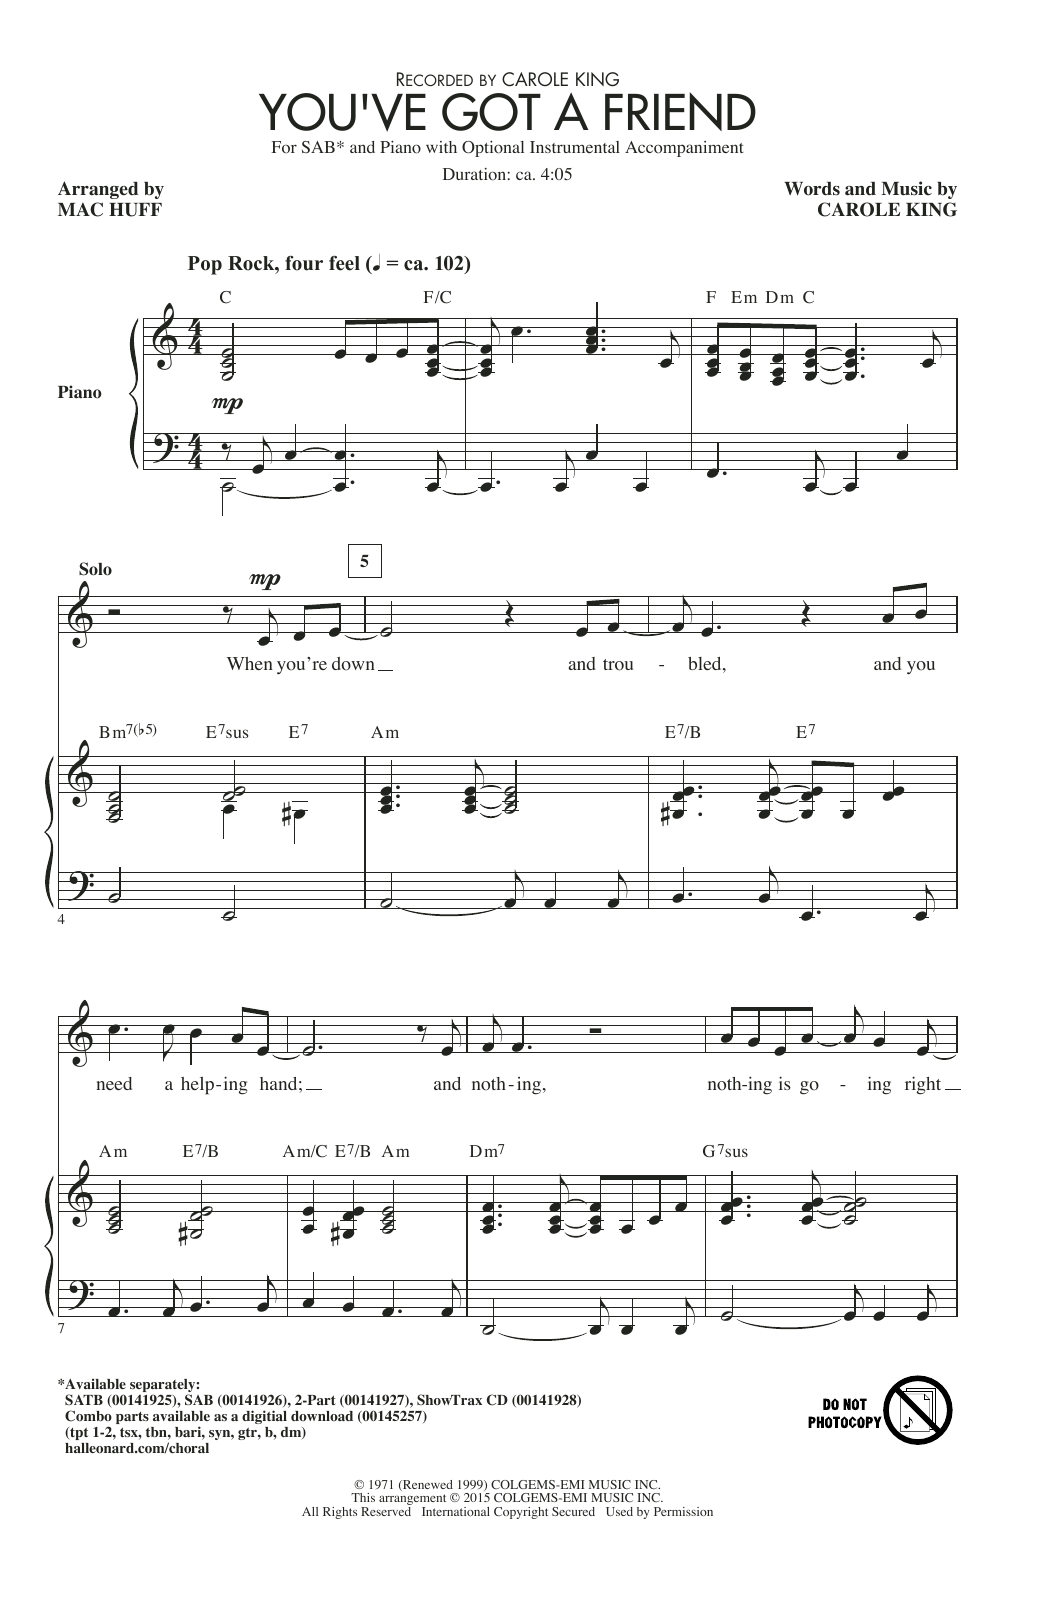 Carole King You've Got A Friend (arr. Mac Huff) Sheet Music Notes & Chords for 2-Part Choir - Download or Print PDF